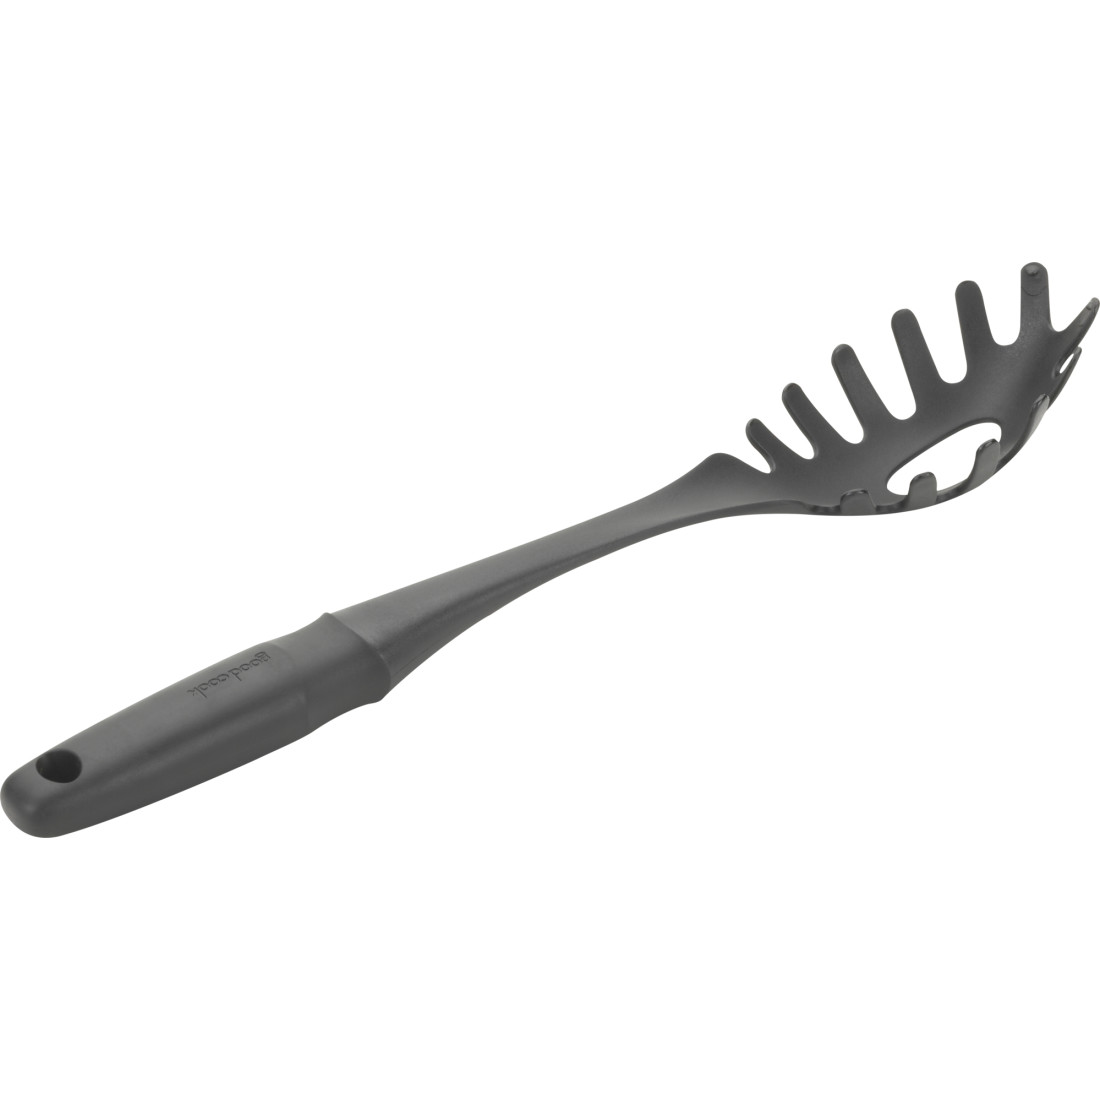 1 Stainless Steel Pasta Spoon + 1 Black Silicone Pasta Spoon